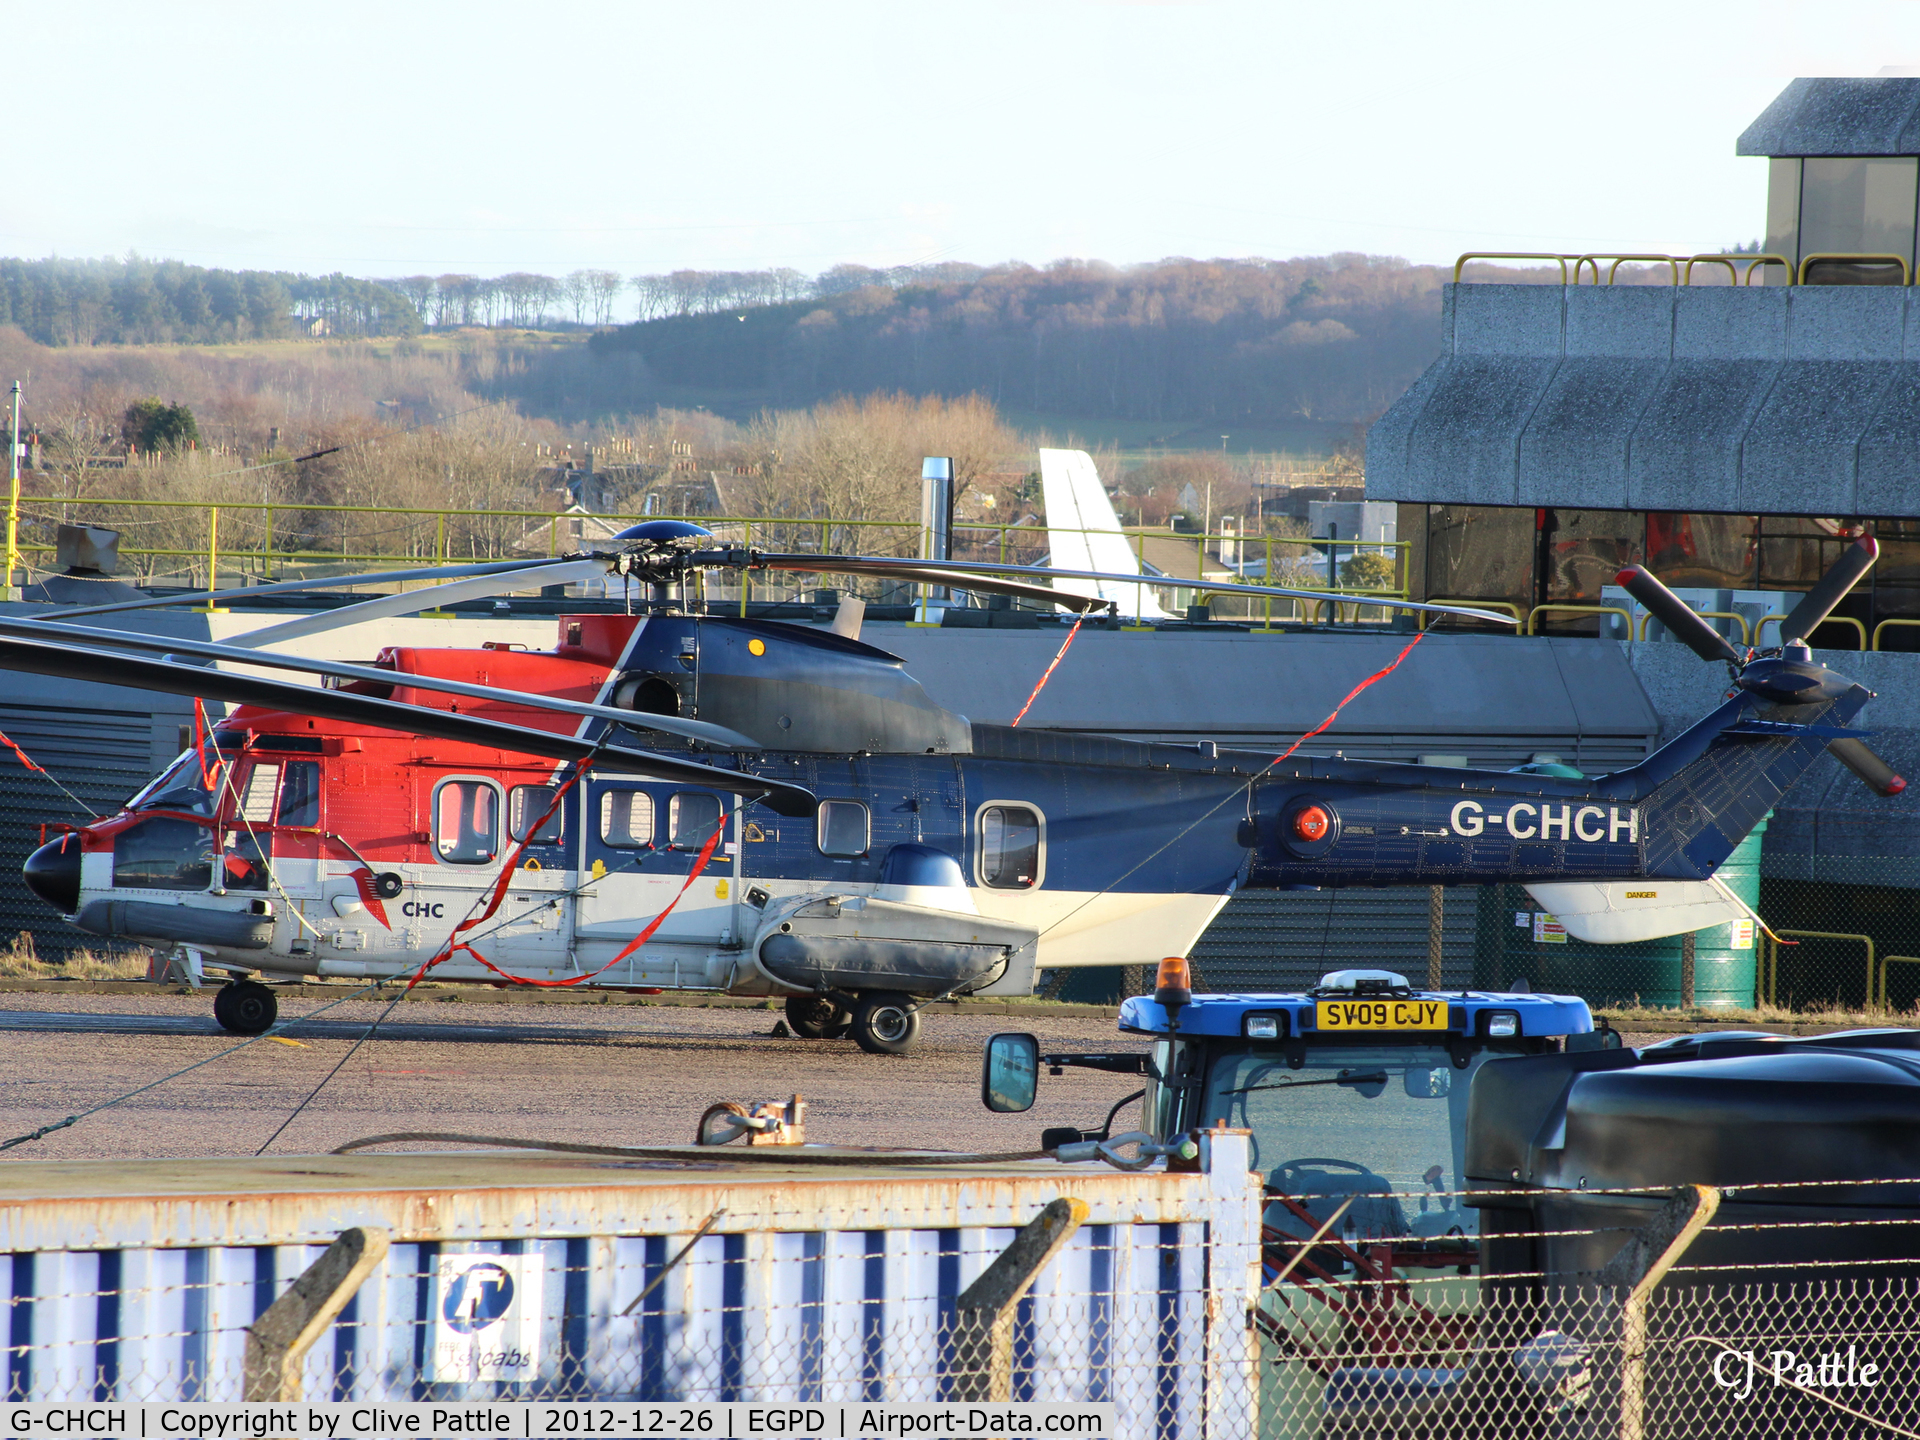 G-CHCH, 2003 Eurocopter AS-332L2 Super Puma Mk2 C/N 2601, Tucked in between the hangars at Aberdeen EGPD